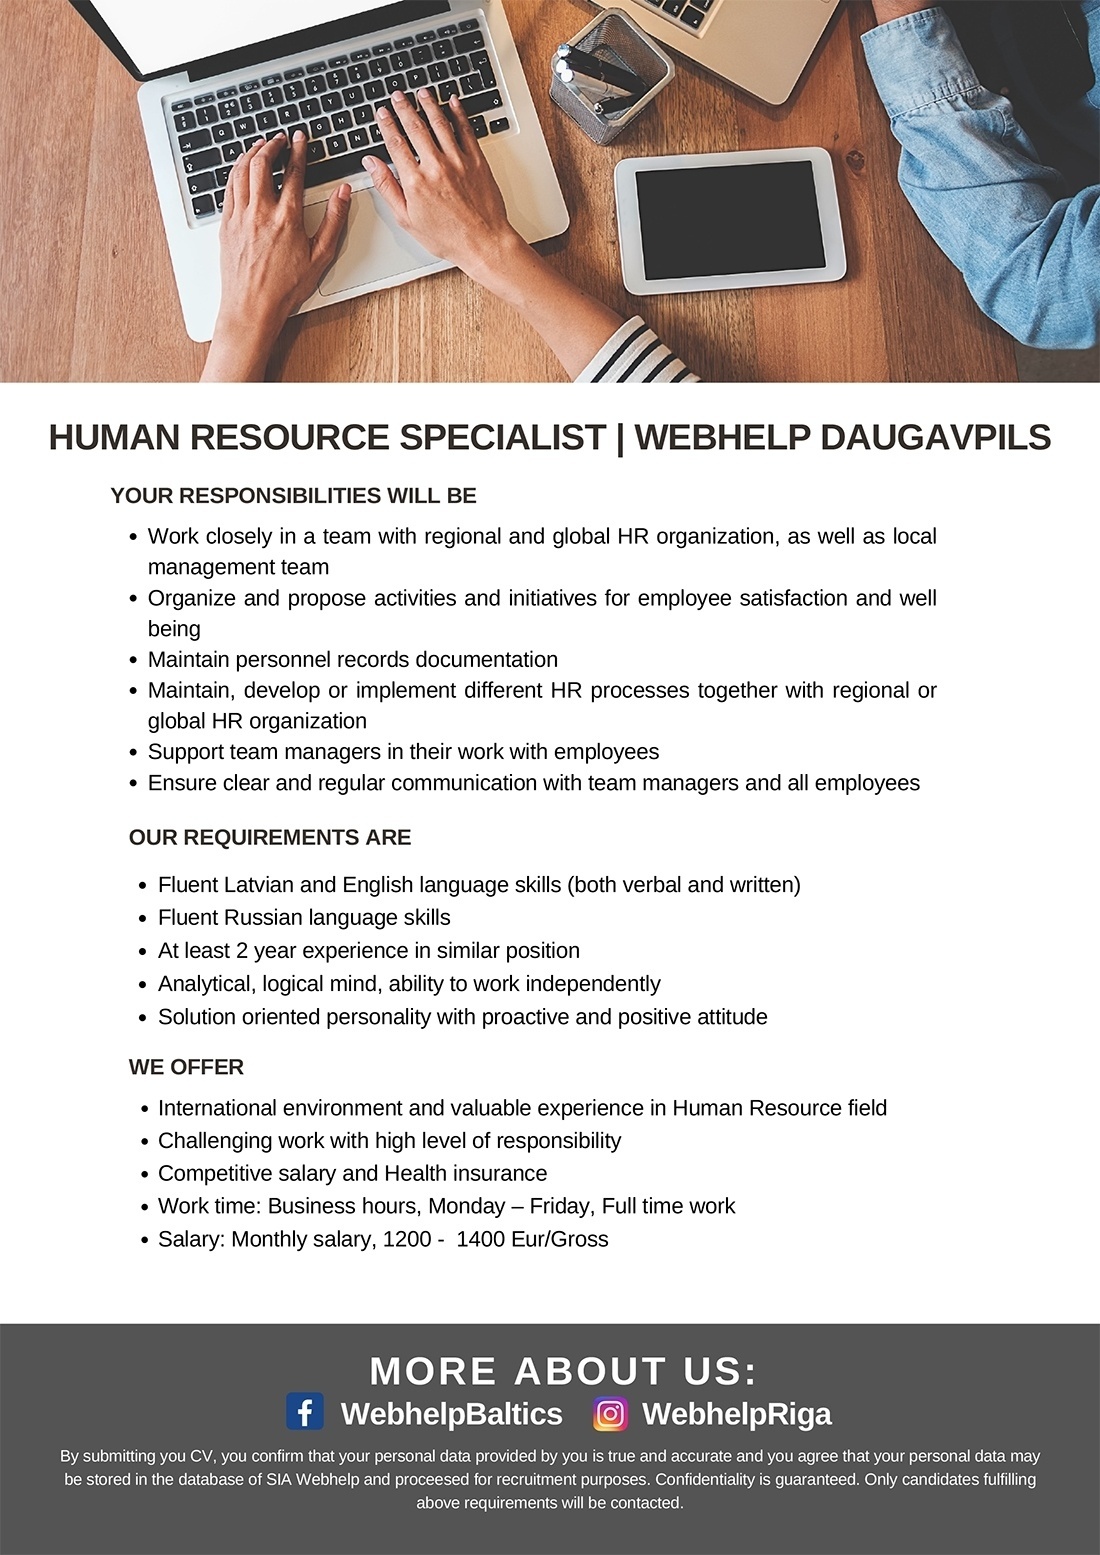 Webhelp Latvia, SIA Human Resource Specialist | Webhelp Daugavpils